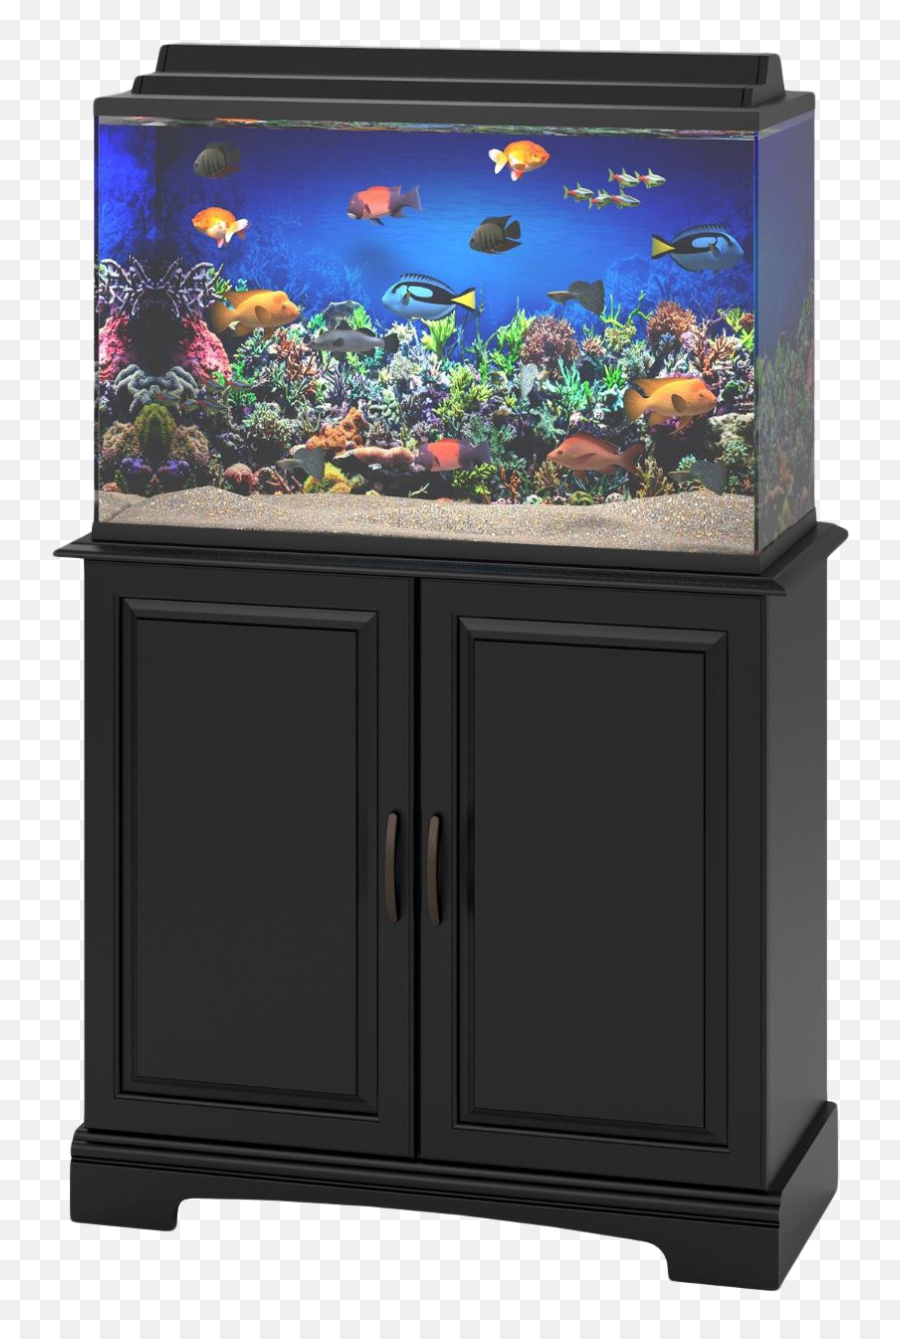 Aquarium Fish Tank Png Transparent Image - Pngpix Emoji,Tank Transparent Background